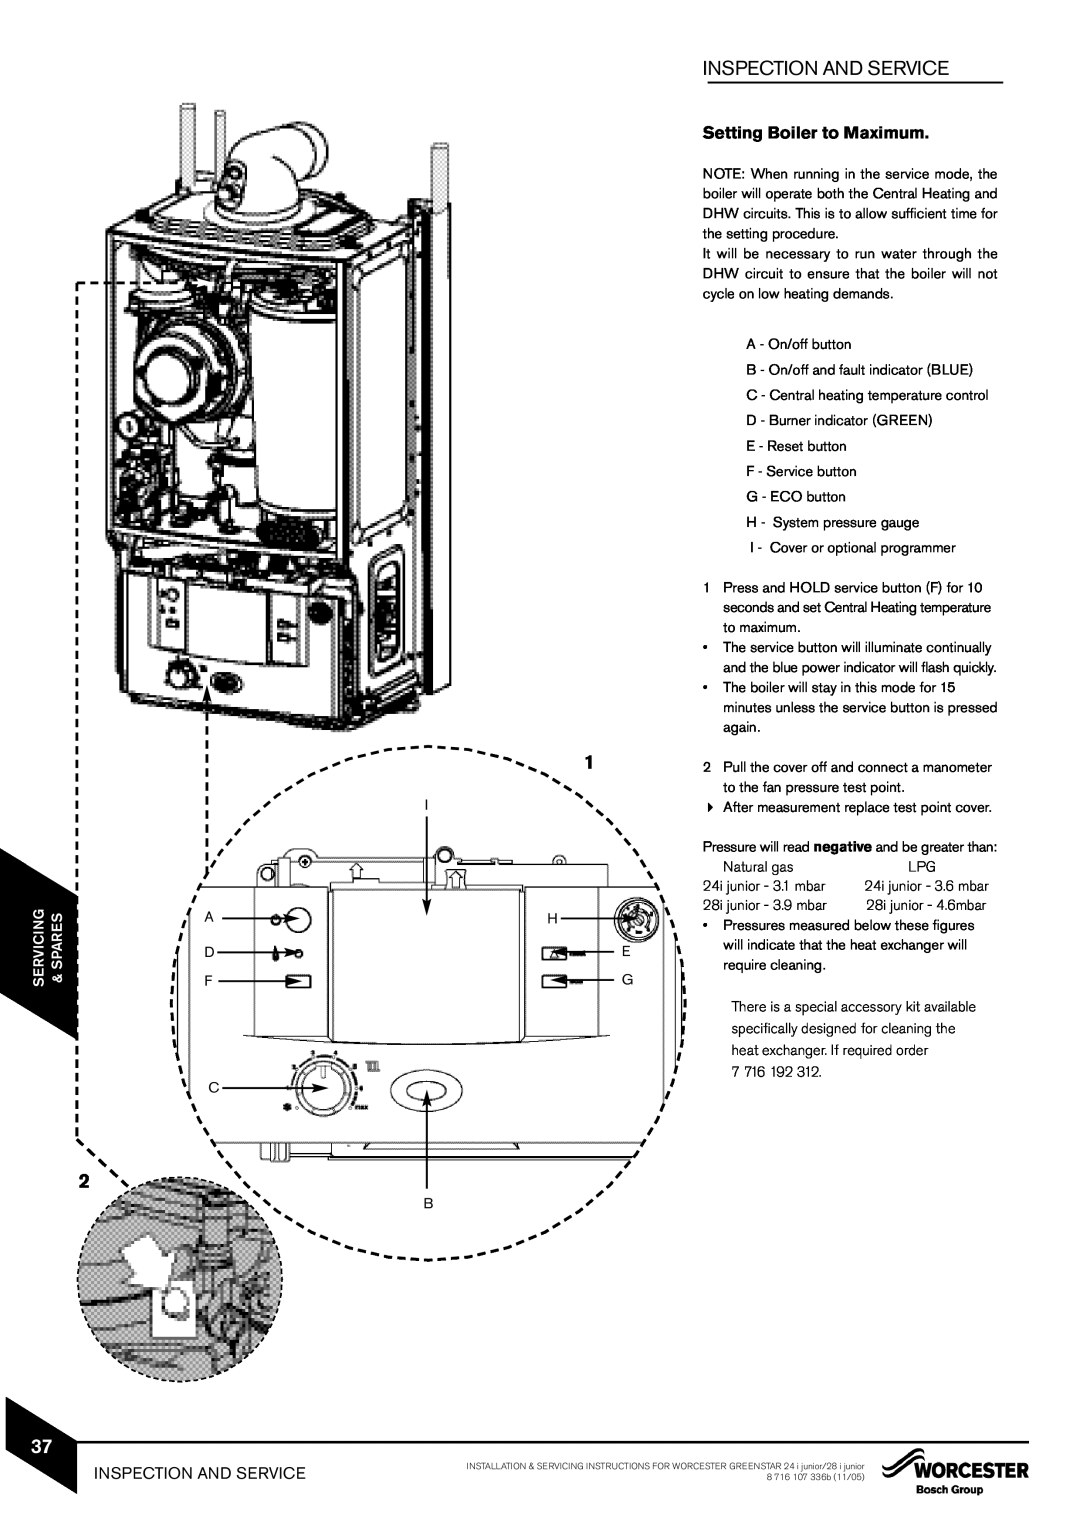 Bosch Appliances 28i junior, 24i junior manual Inspection And Service, Setting Boiler to Maximum, Servicing, Spares 